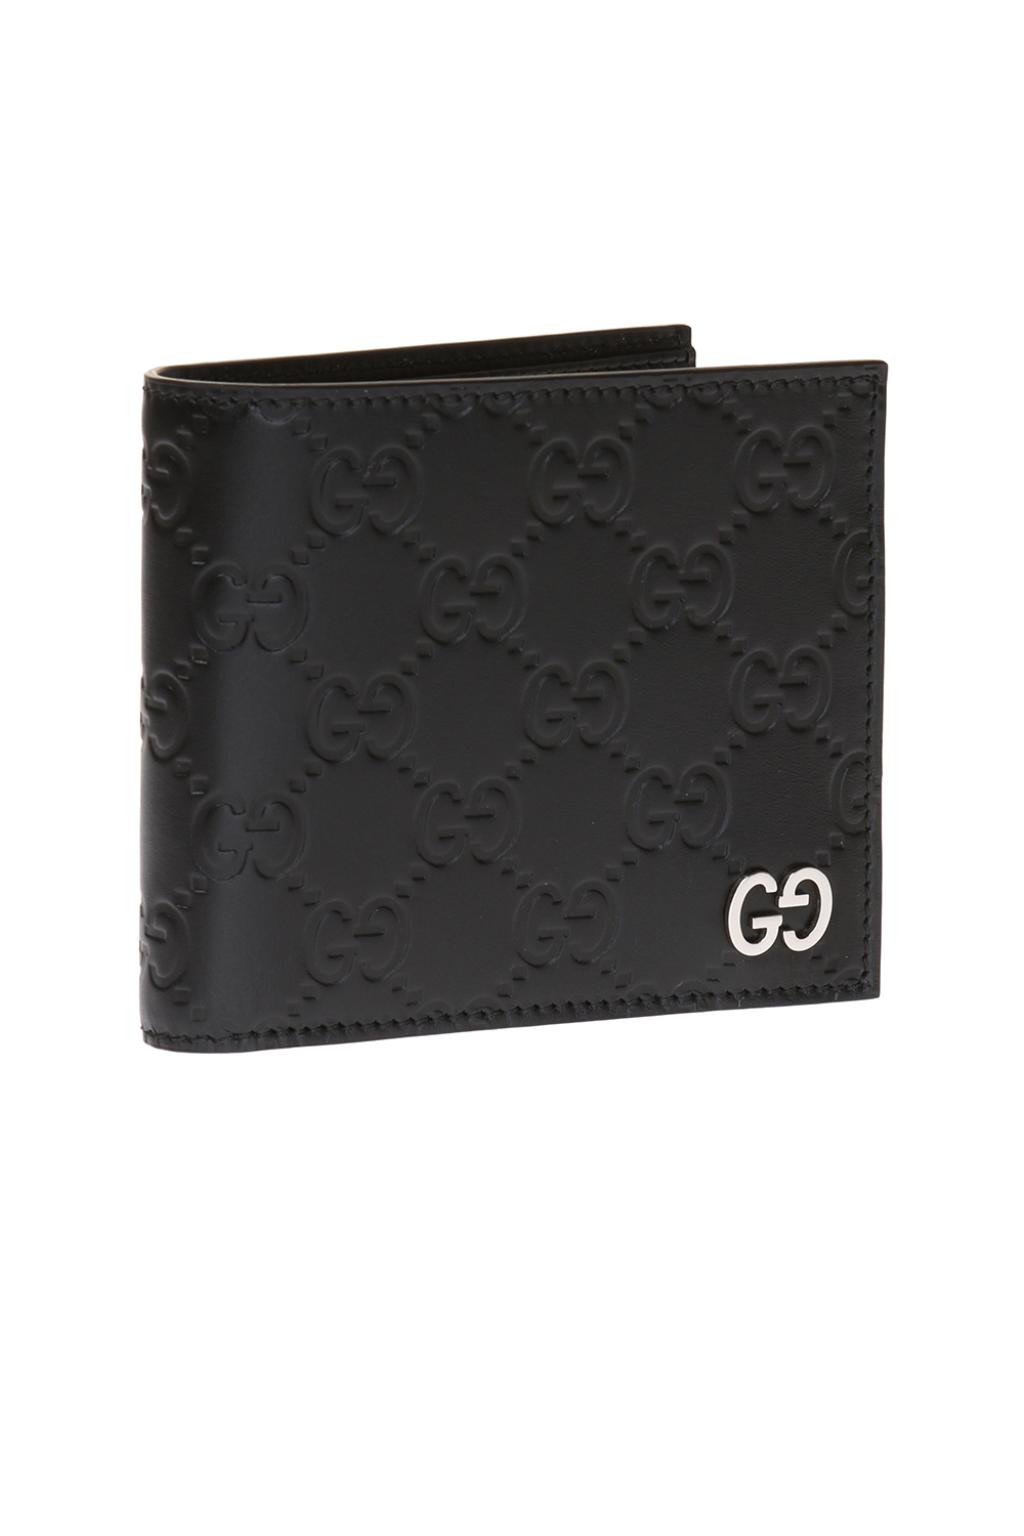 Gucci Leather bi-fold wallet